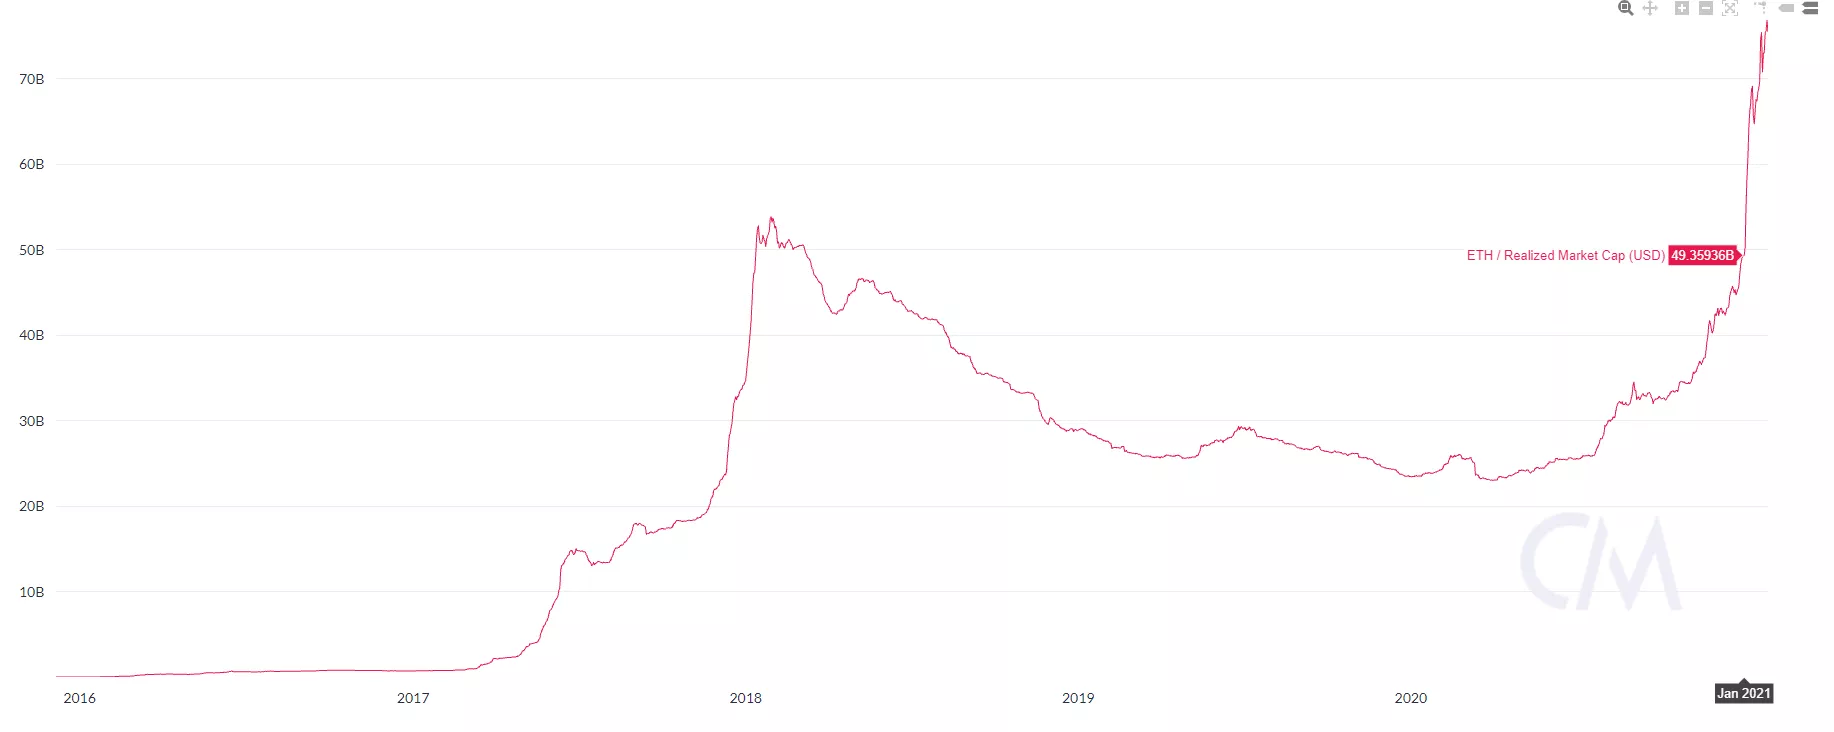 С начала года реализованная капитализация Ethereum выросла на $25 млрд